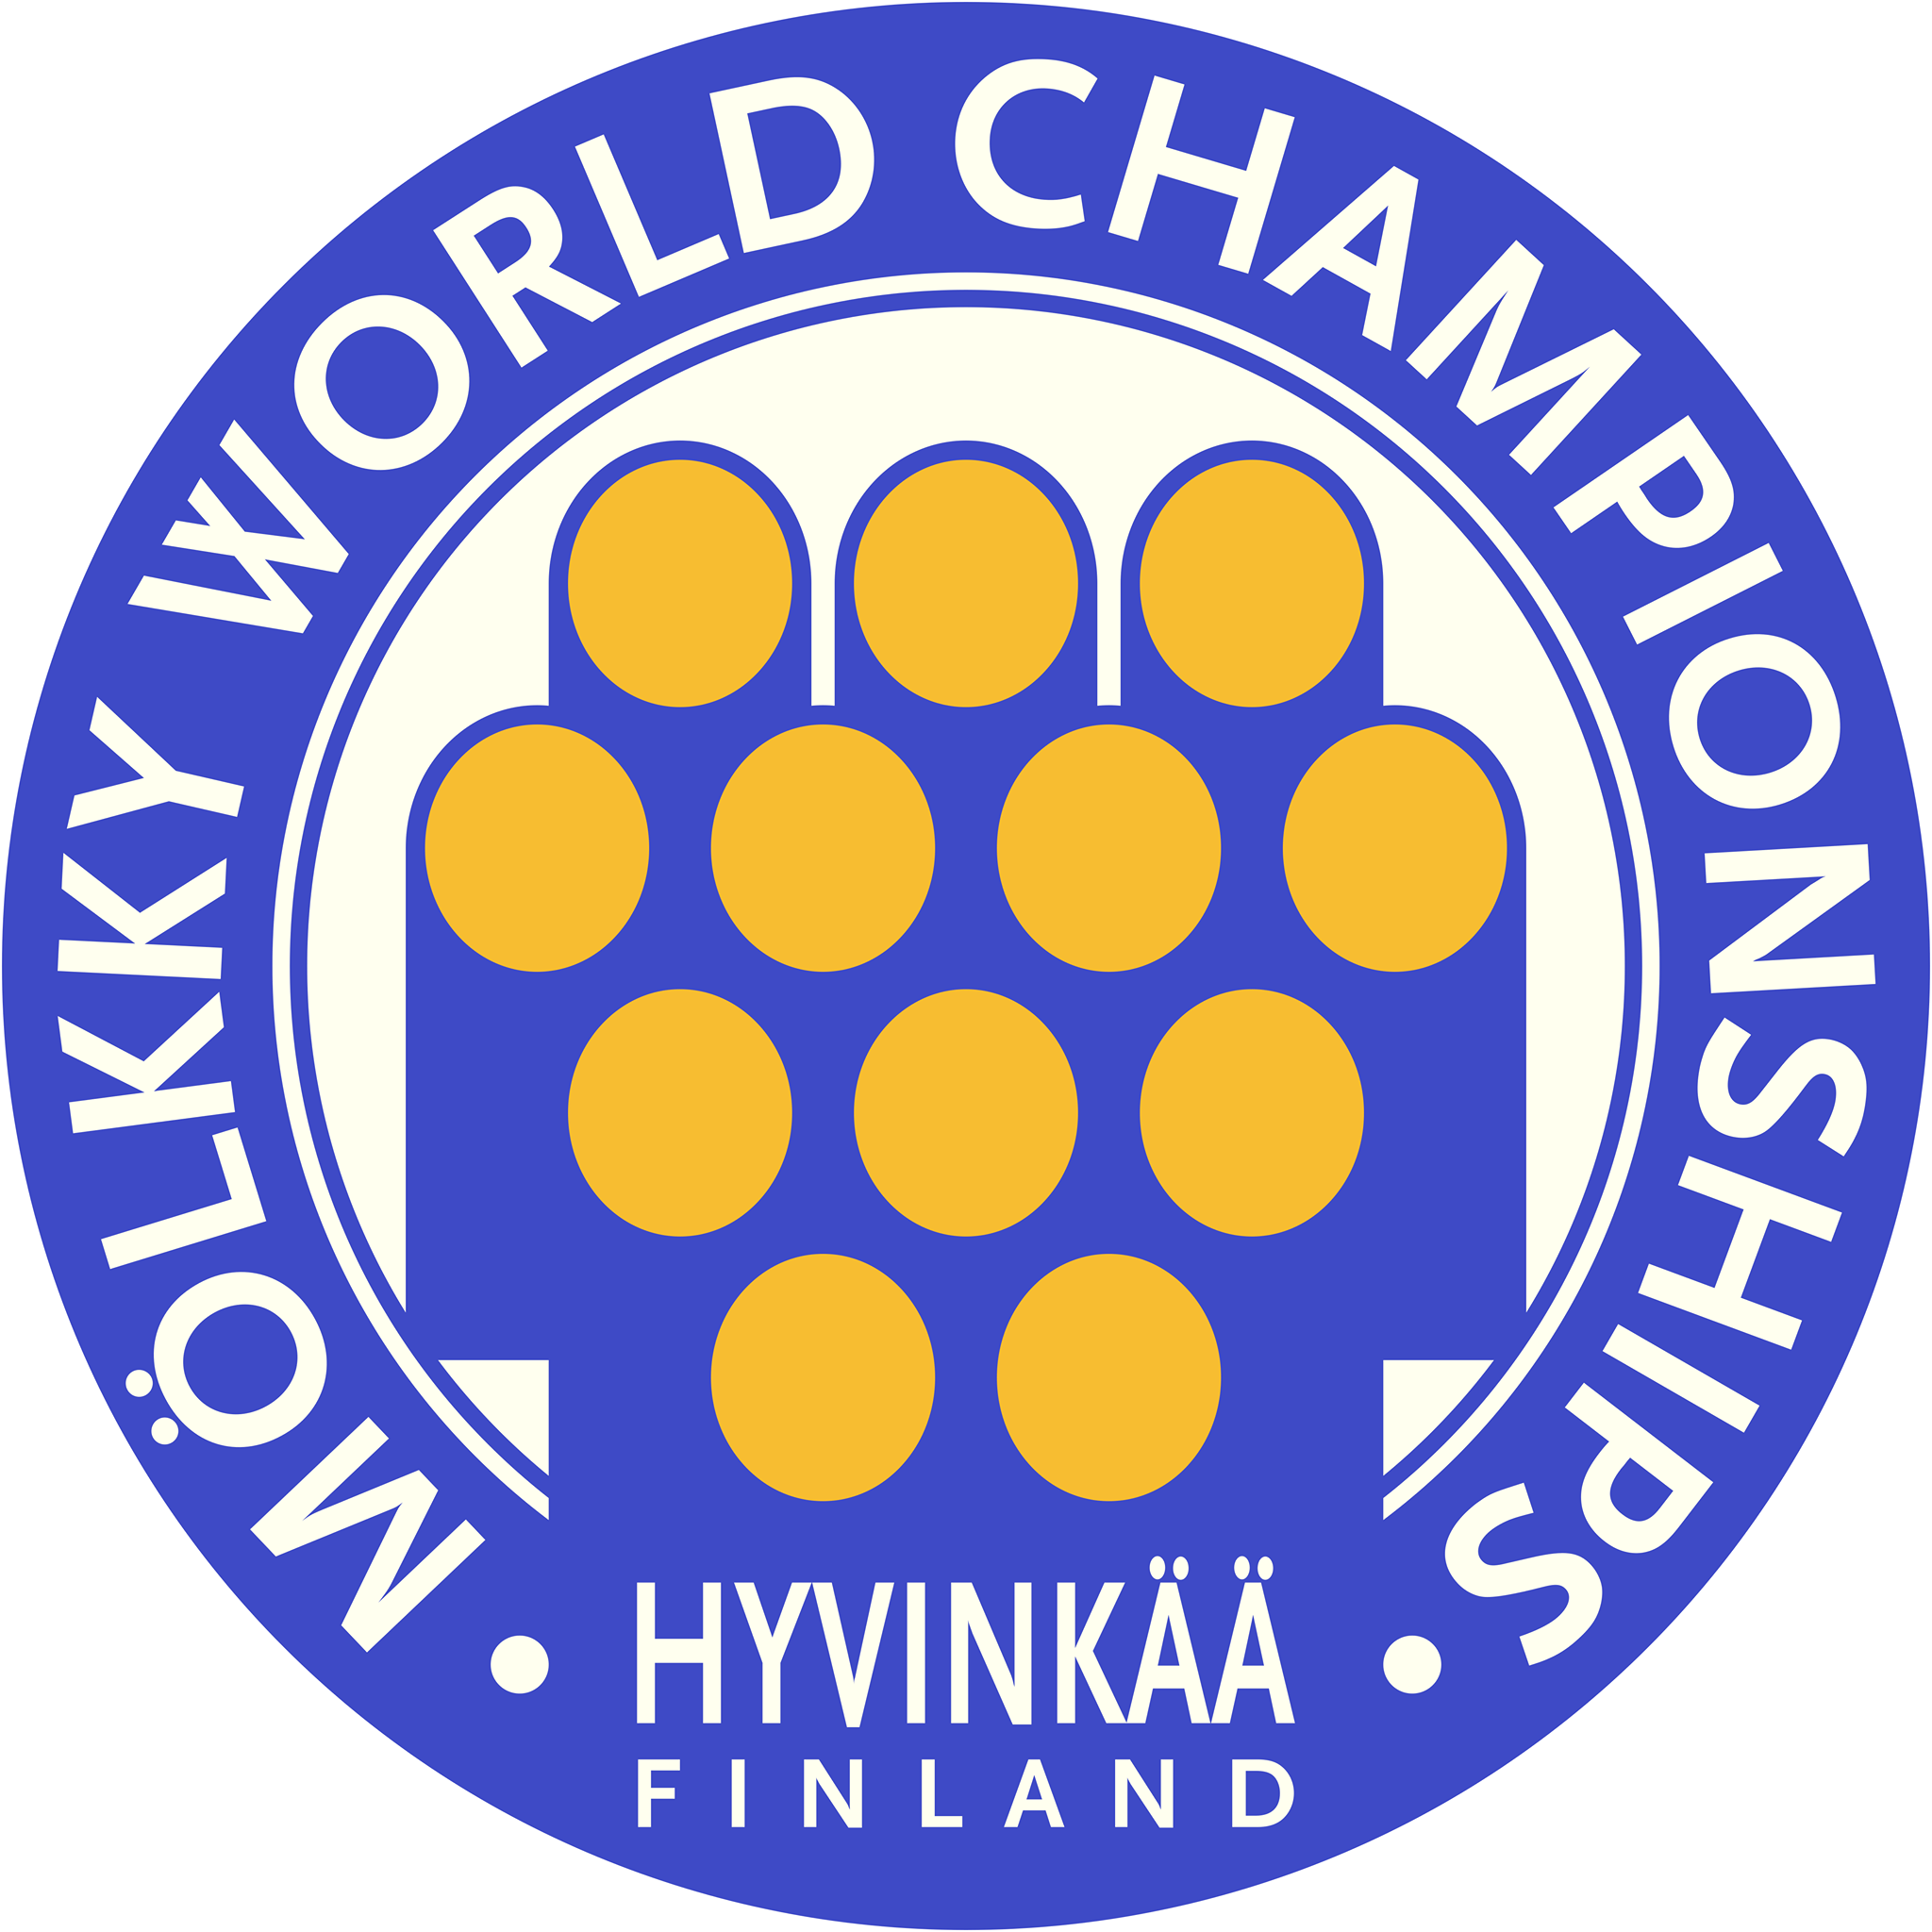 MM - World Championships